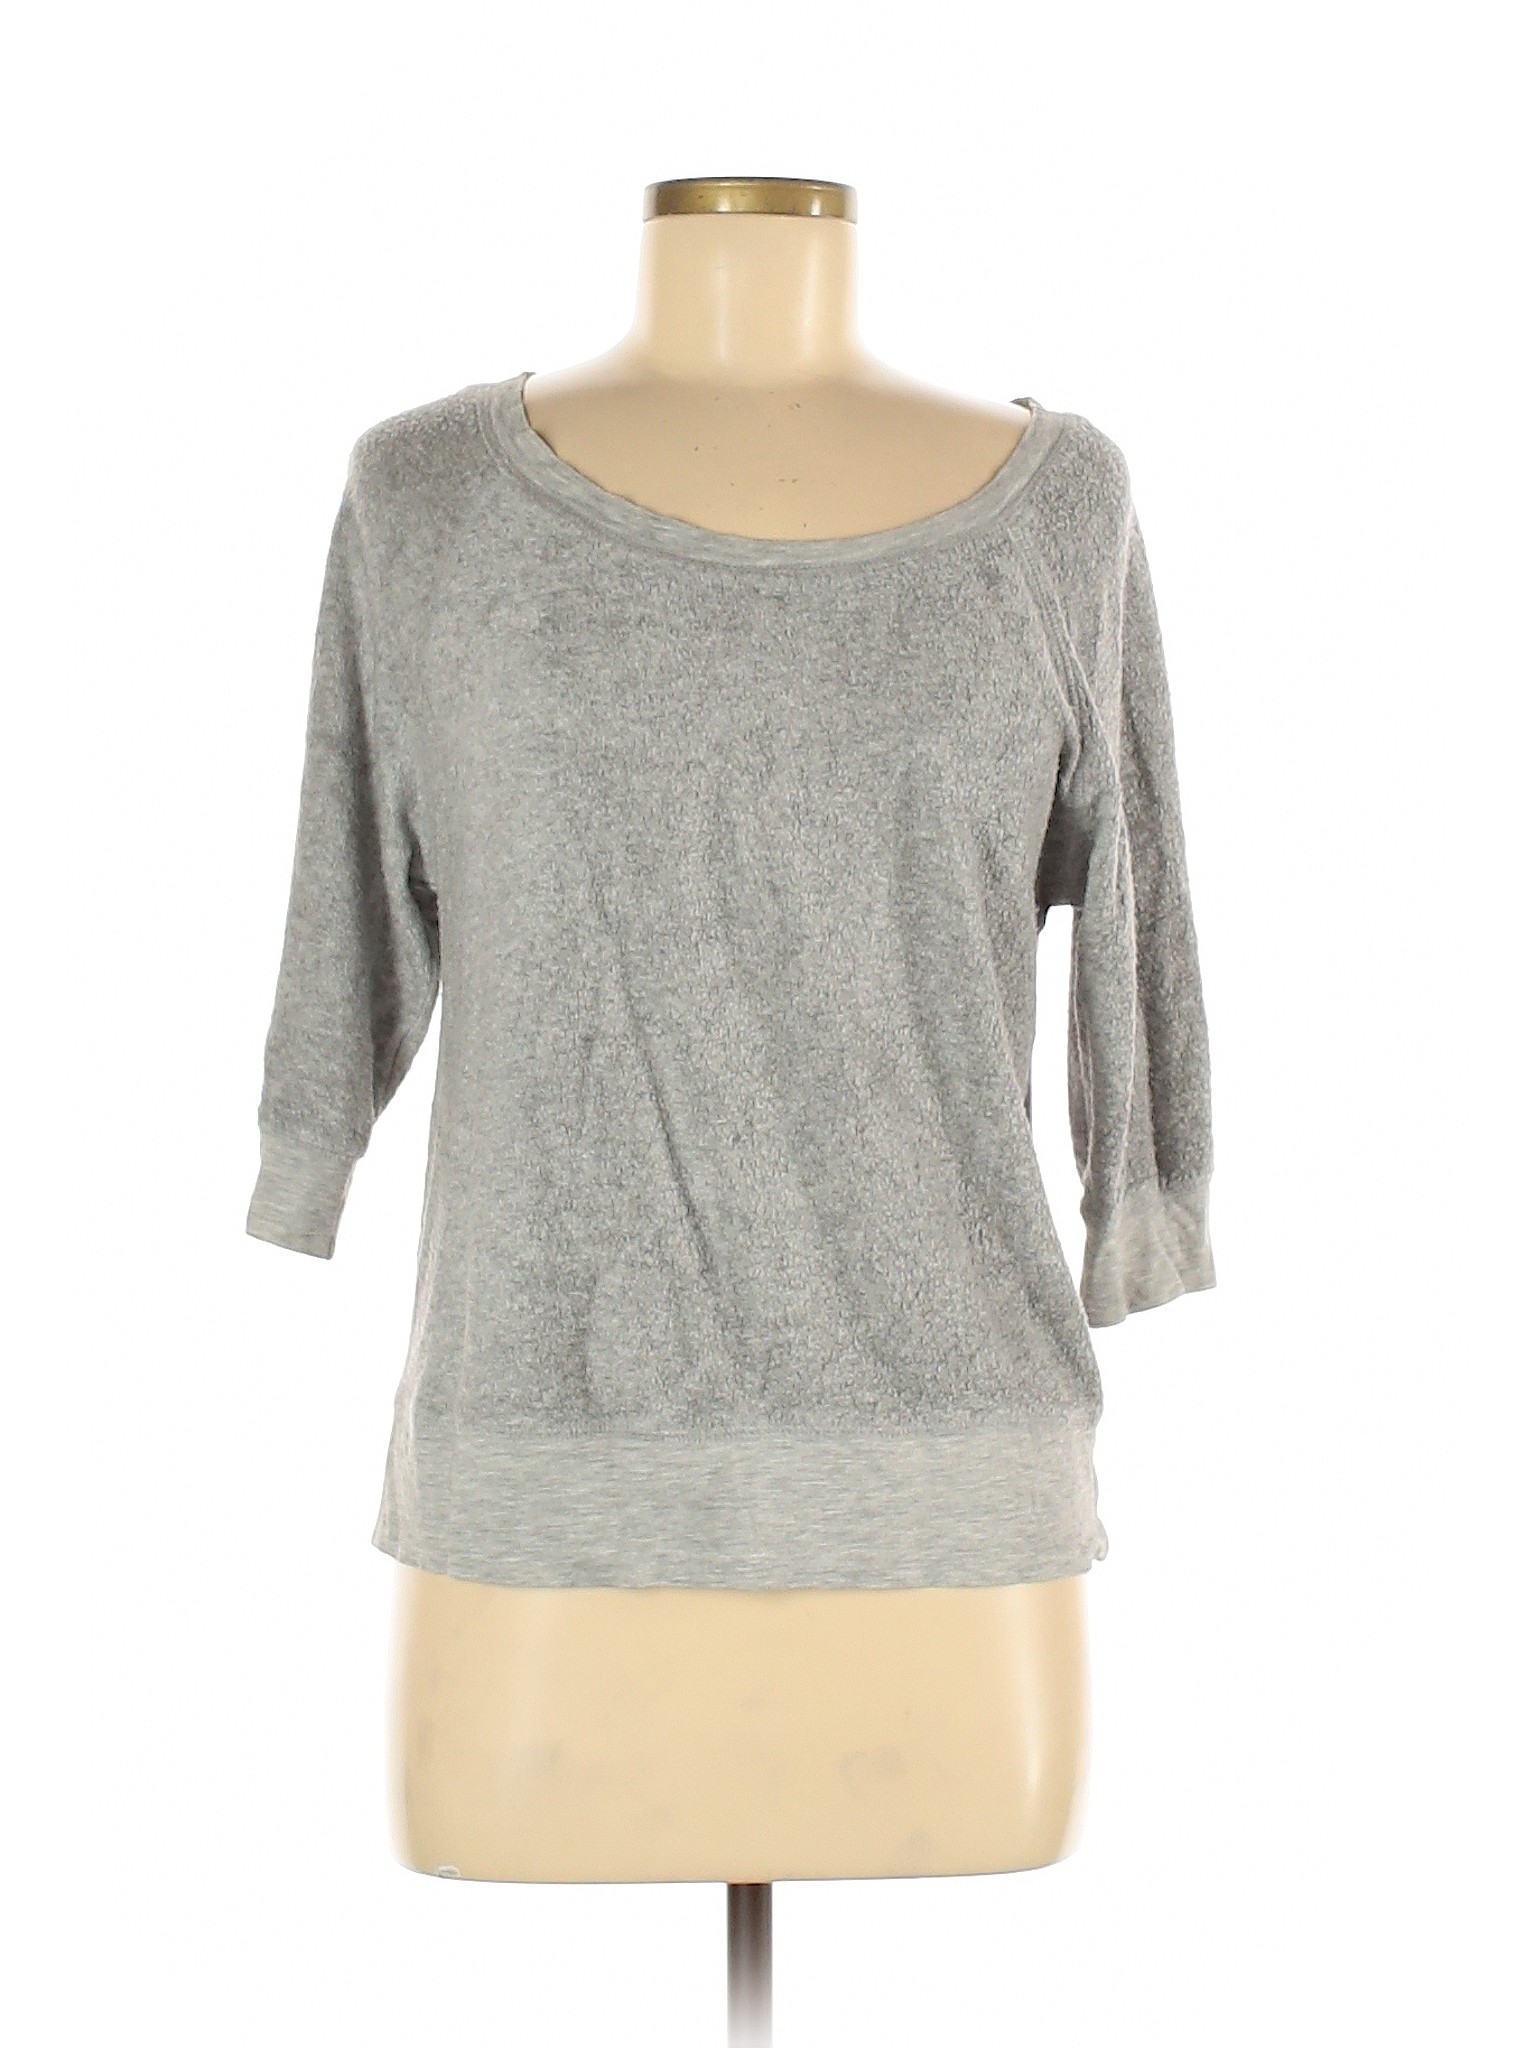 Aqua Women Gray Pullover Sweater M | eBay